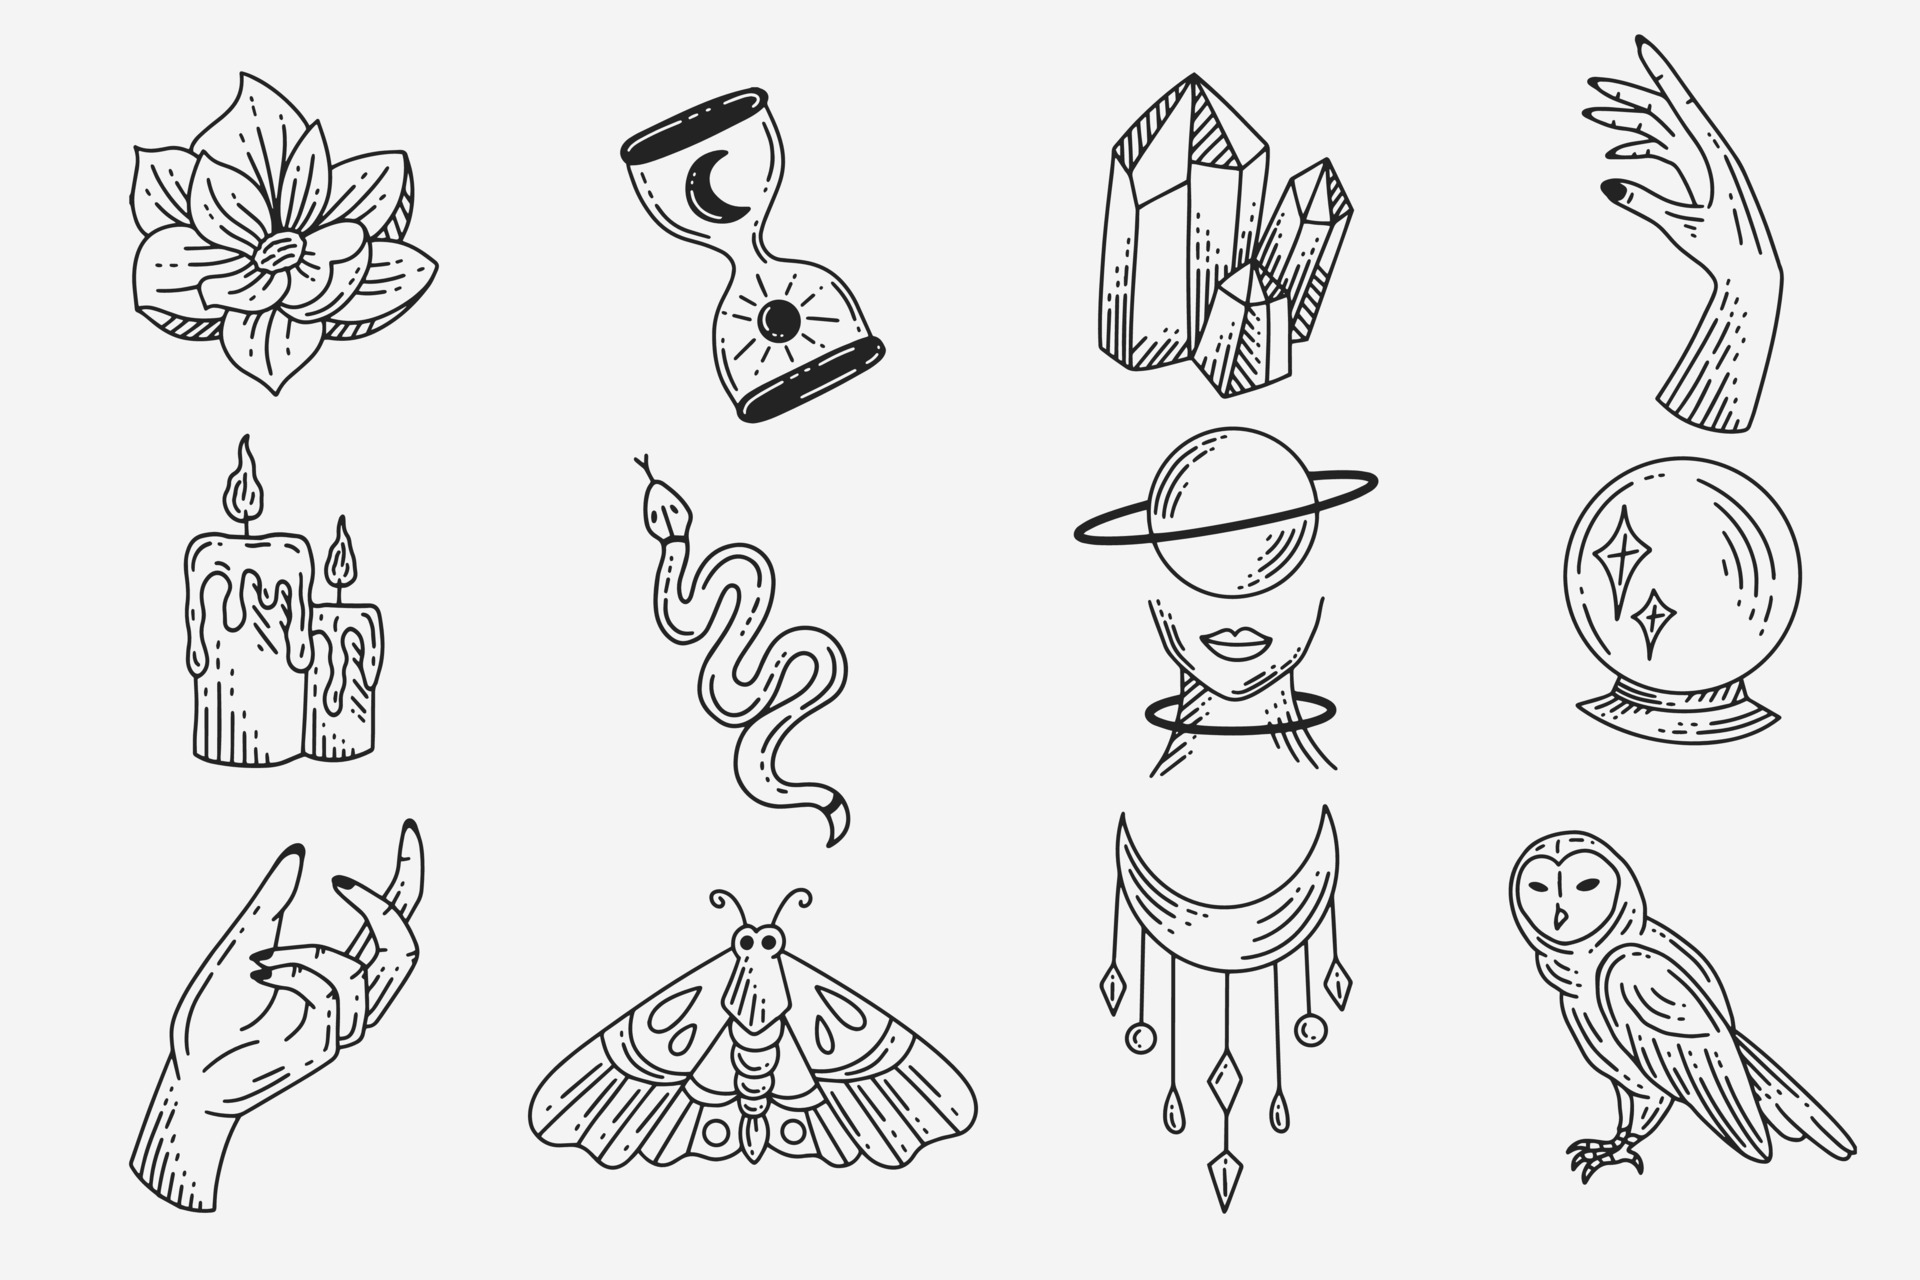 232491 Tattoo Element Doodle Images Stock Photos  Vectors  Shutterstock